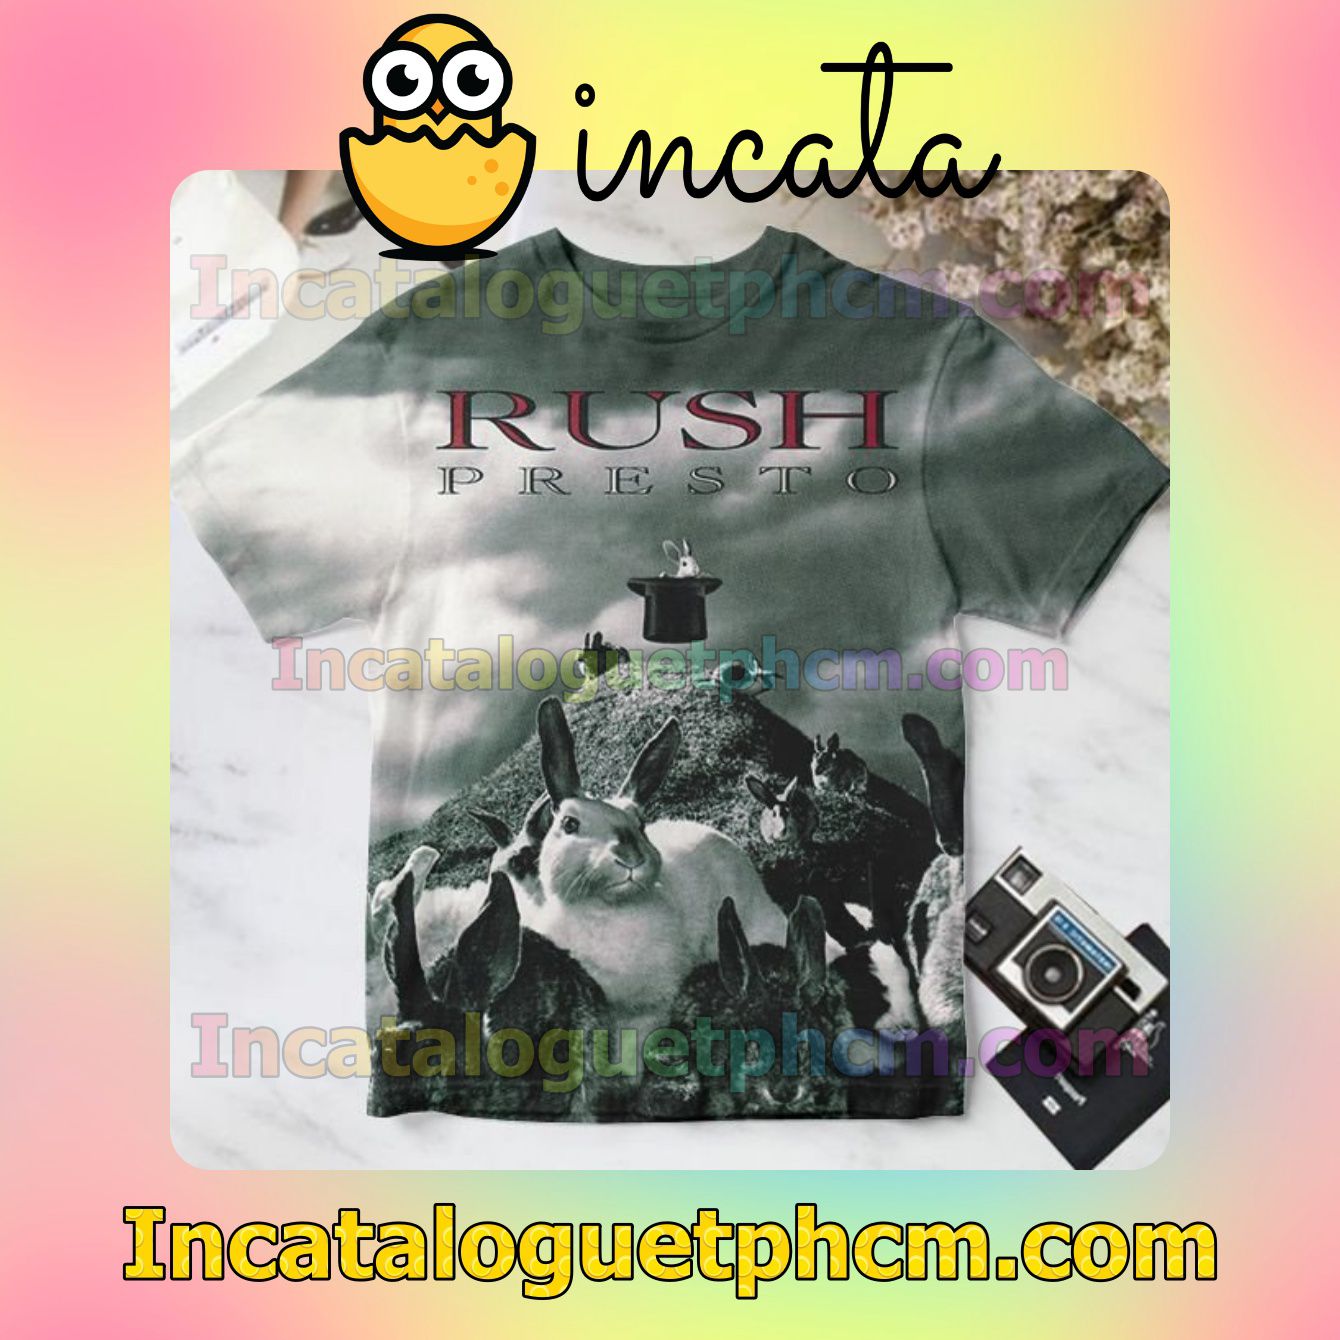 Presto Album Cover By Rush For Fan Shirt